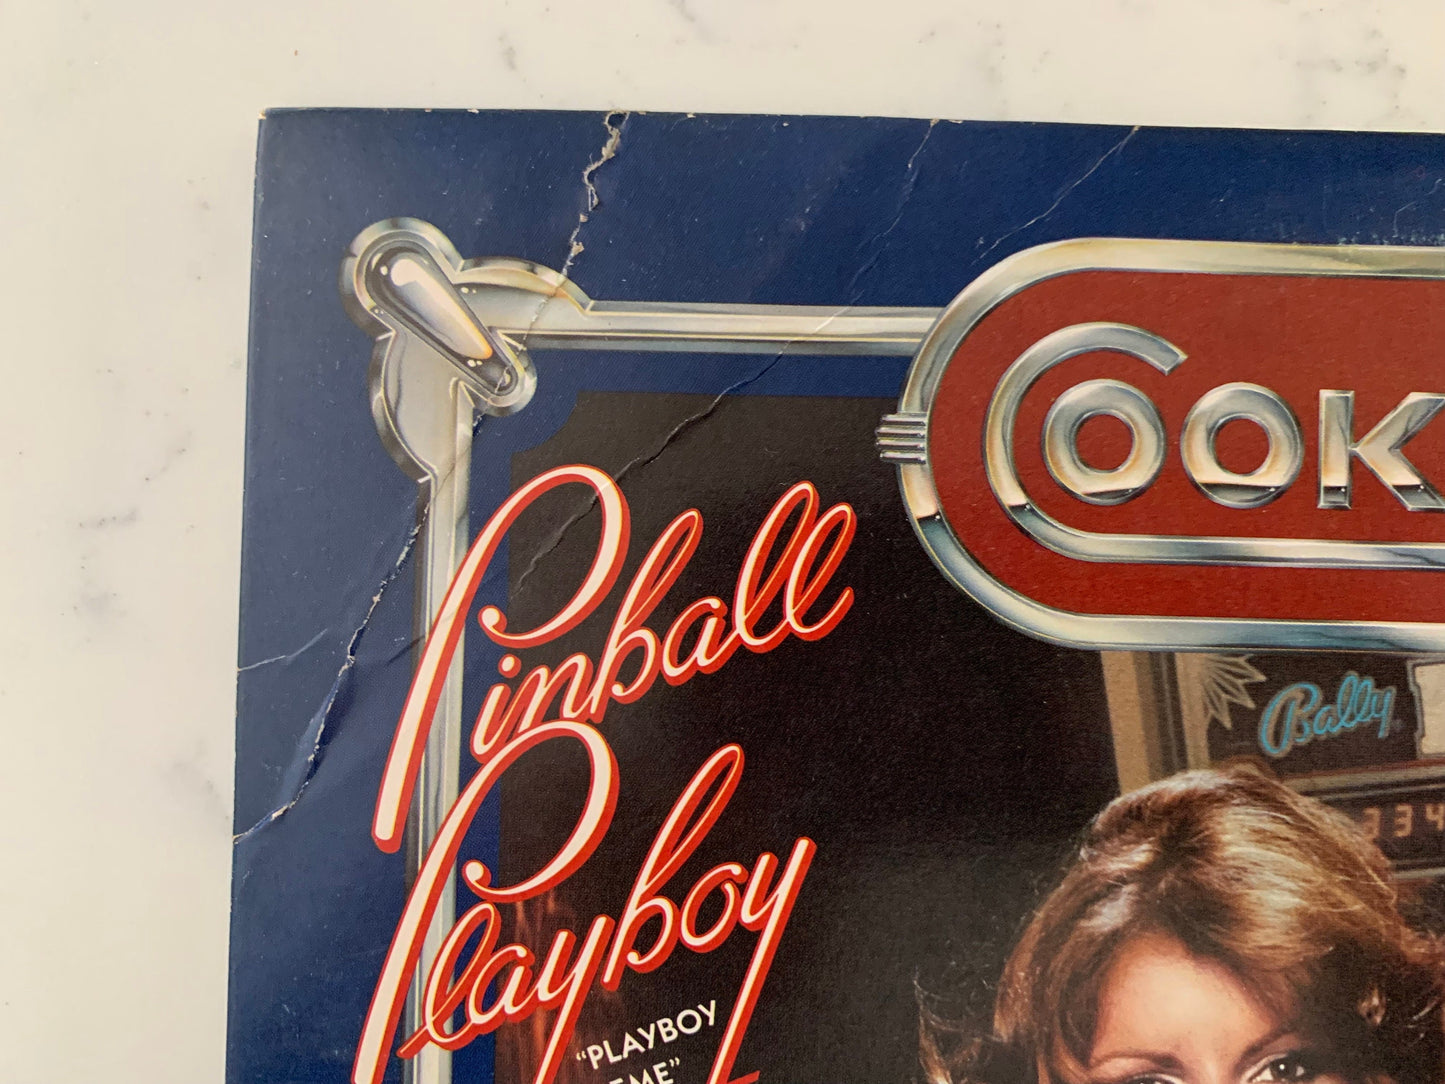 Cook County Pinball Playboy (Playboy Theme) Disco, Jazz Funk Soul Vintage Vinyl Records Motown M7-930R1 PROMO 1979 Original